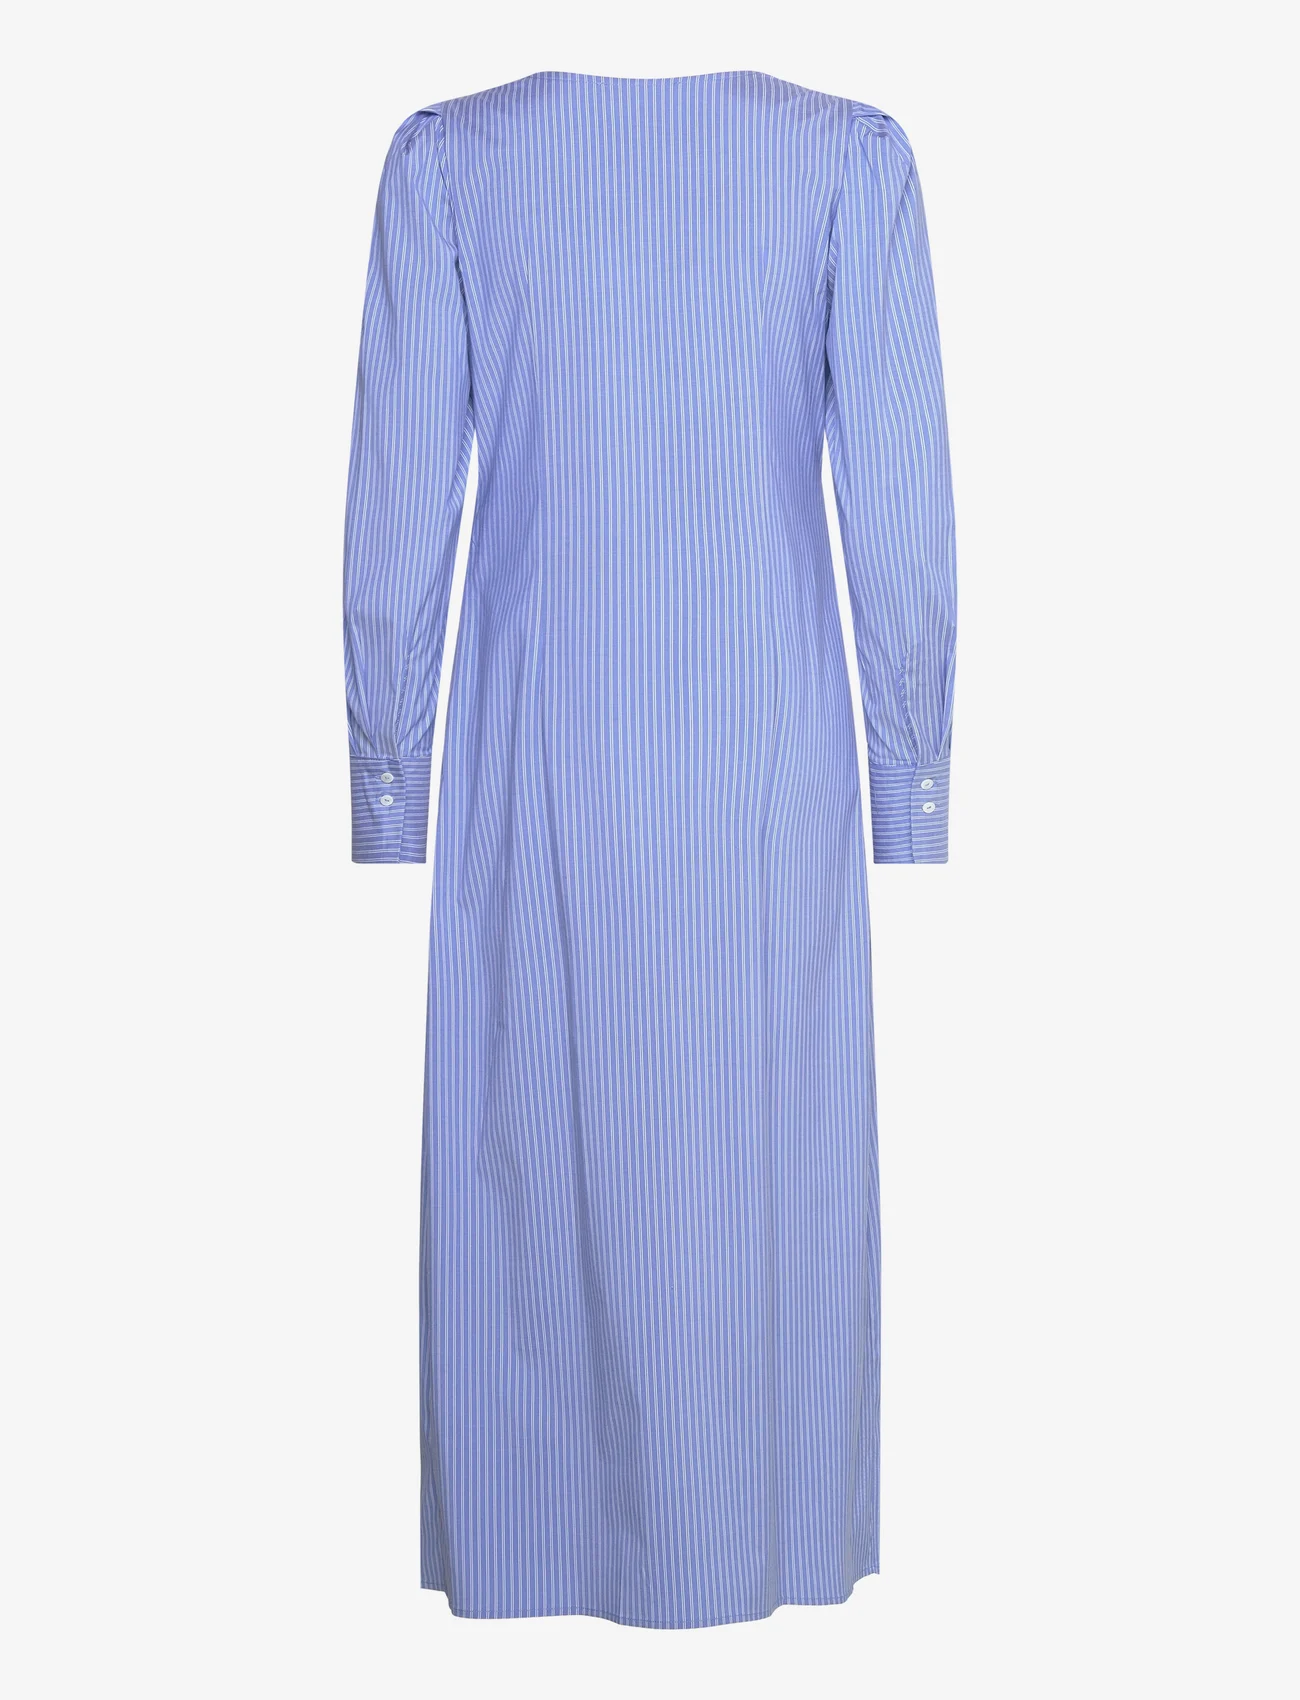 Sofie Schnoor - Dress - summer dresses - blue striped - 1